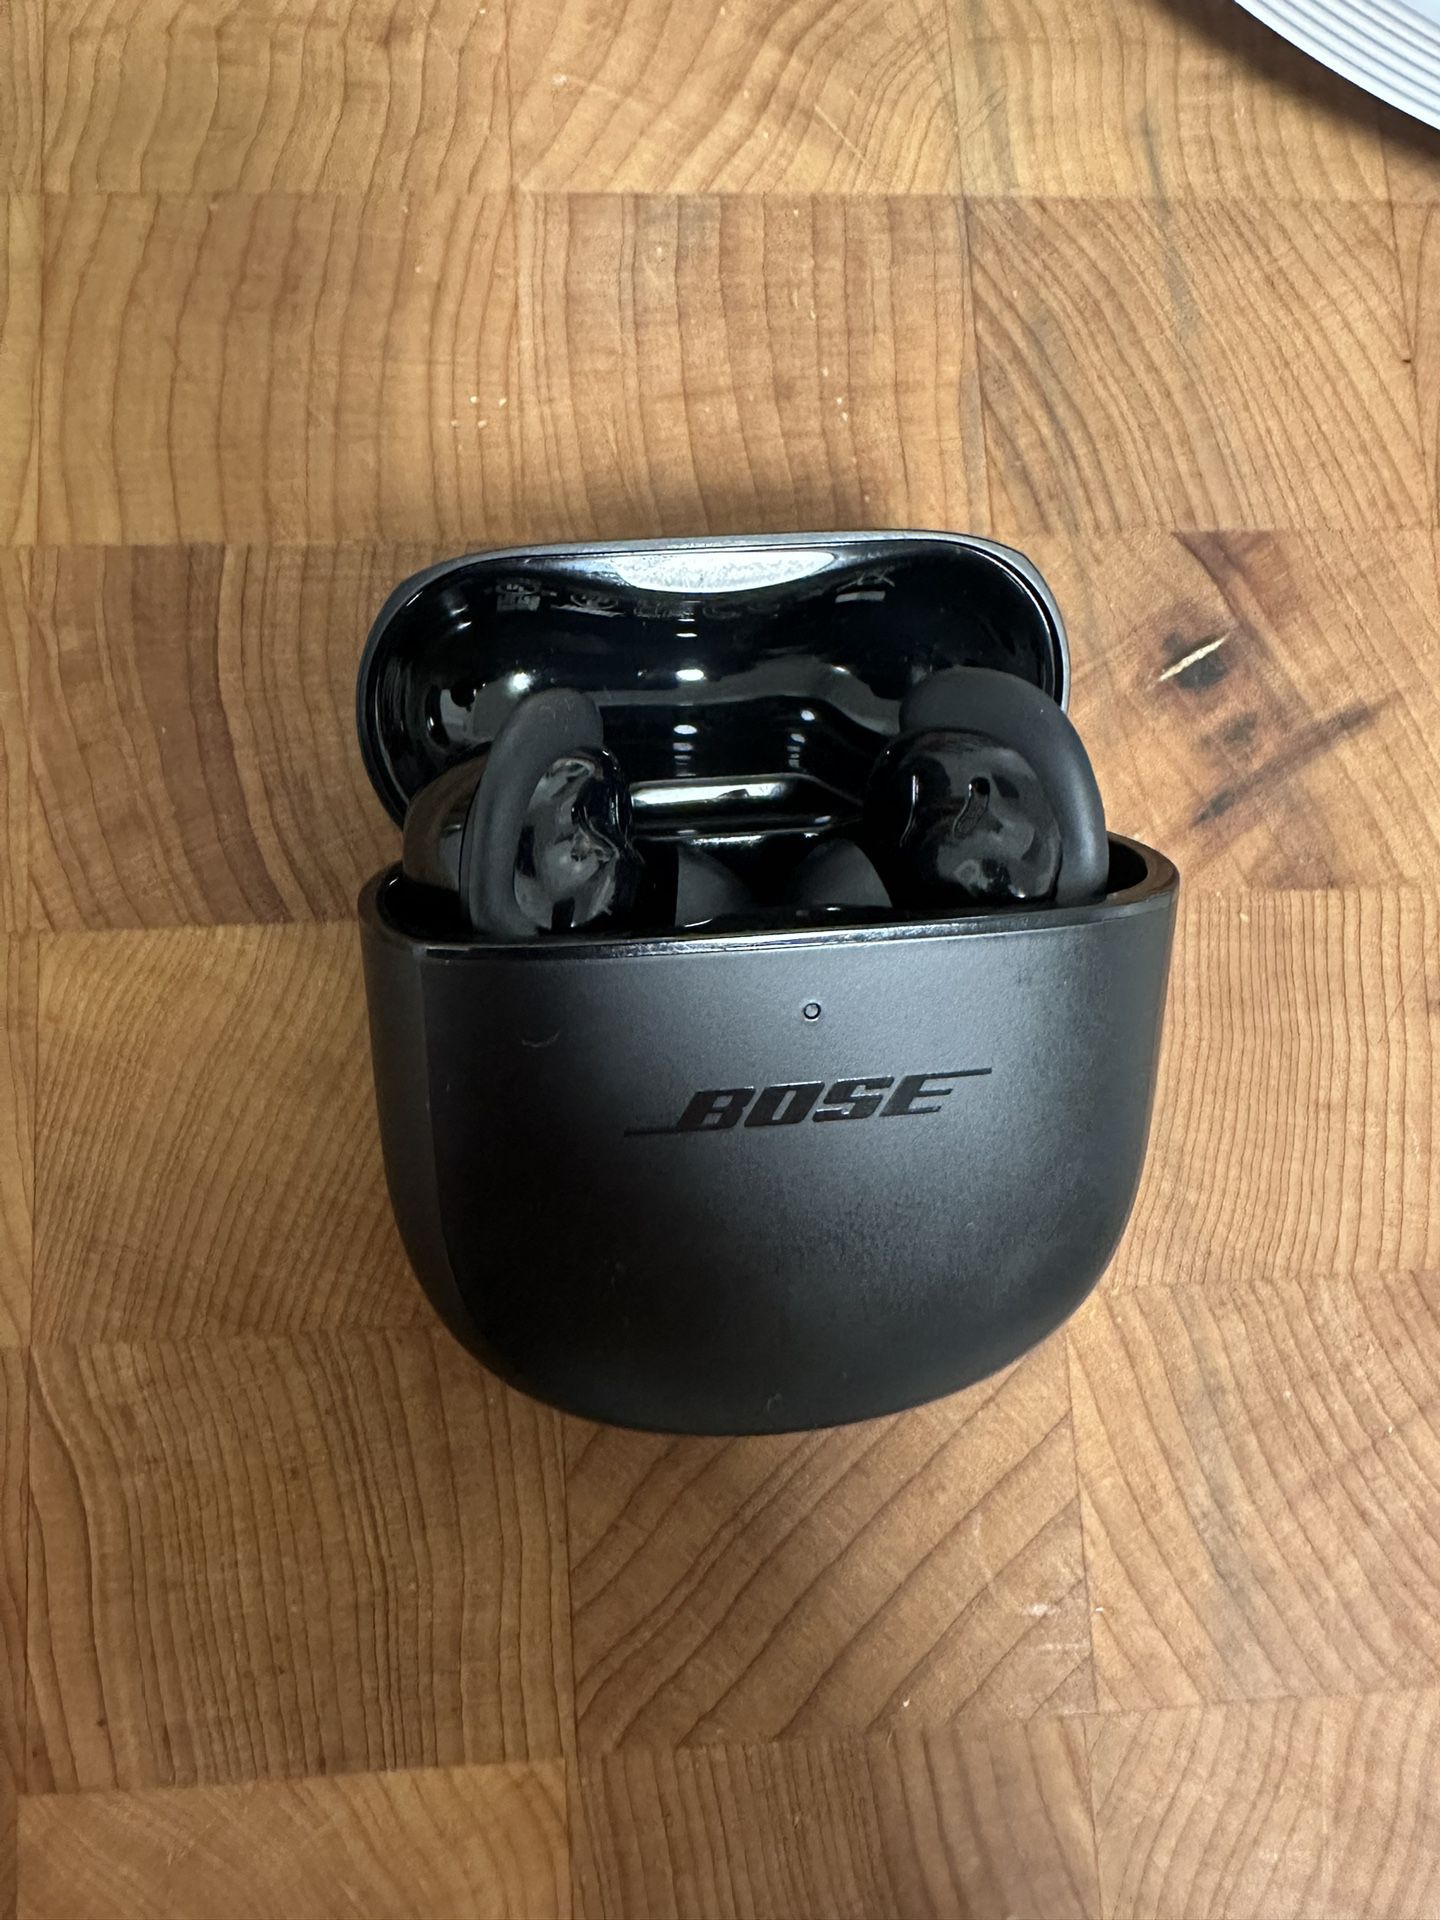 Bose Quiet Comfort II Earbuds - Noise Canceling